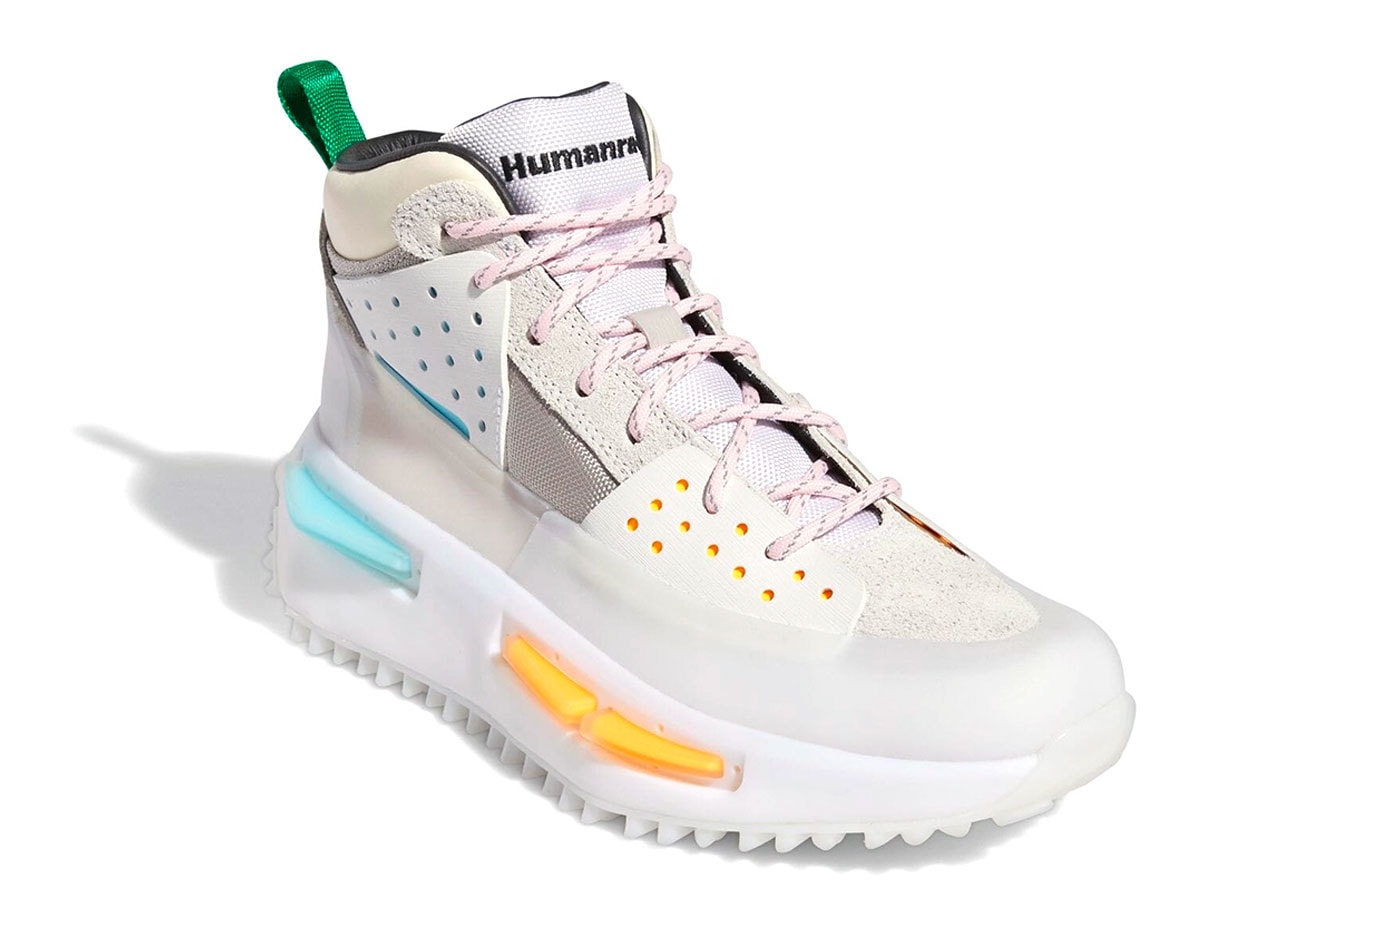 Pharrell adidas NMD S1 RYAT HU boot Release Info Williams